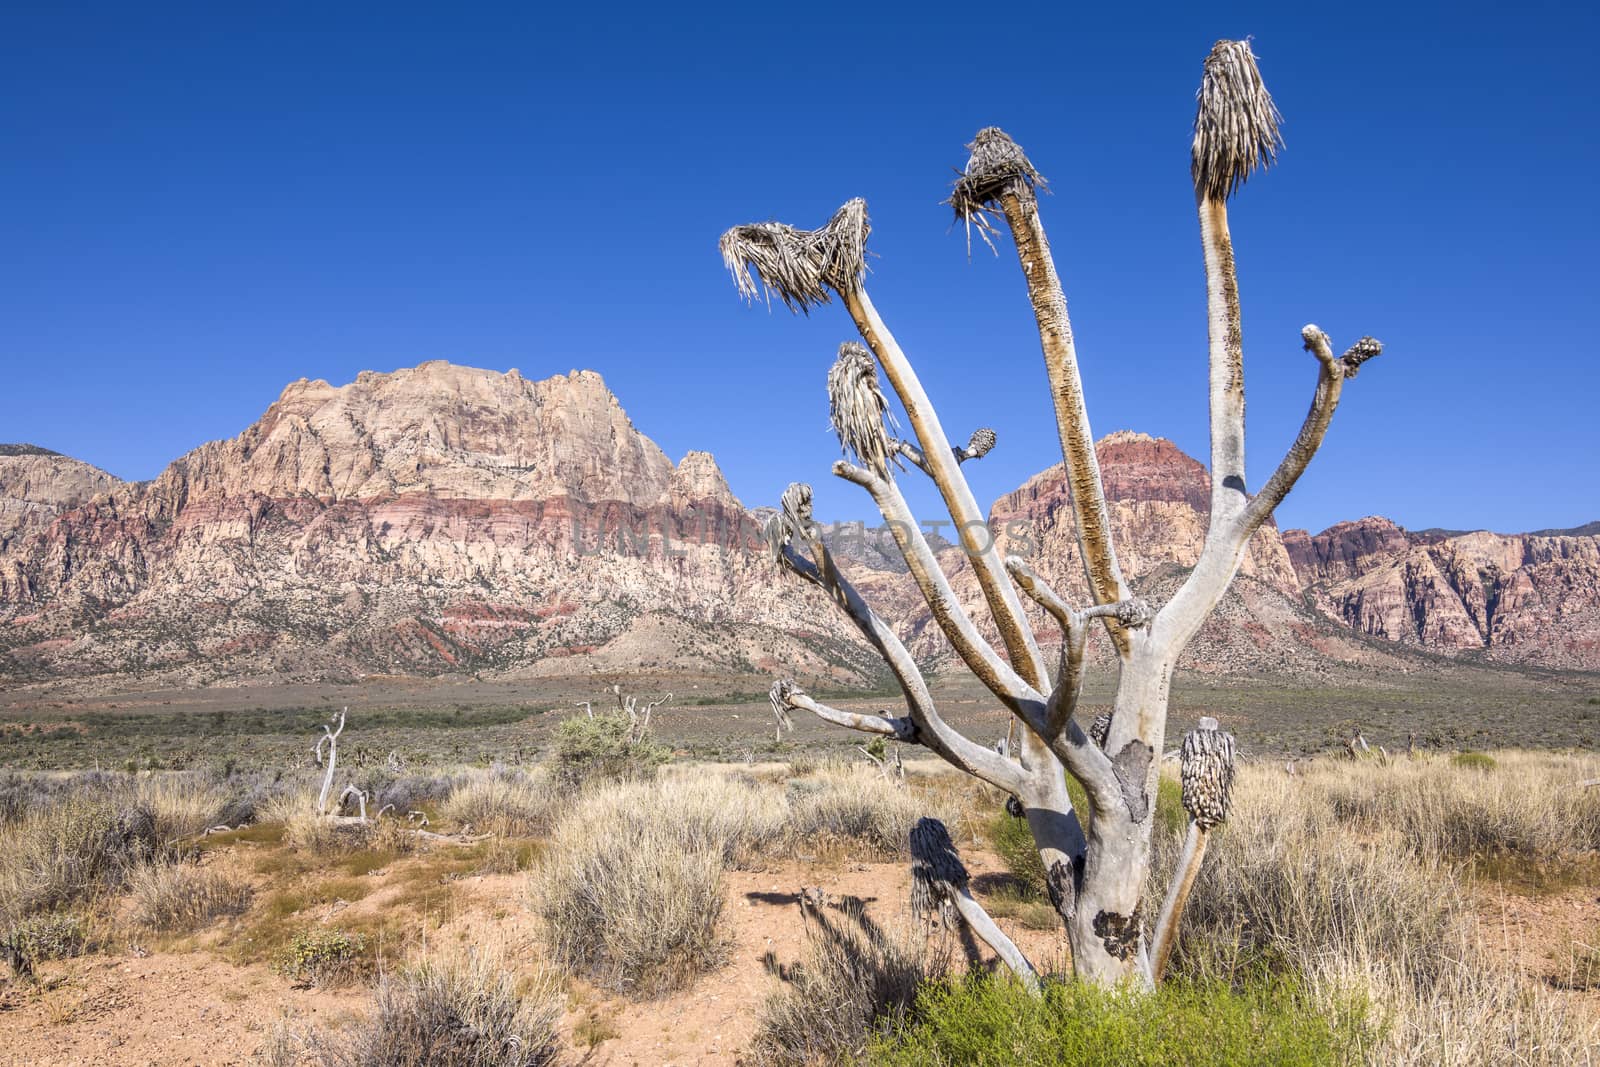 Dead Joshua tree in Red Rock Canyon desert, Nevada by shakzu